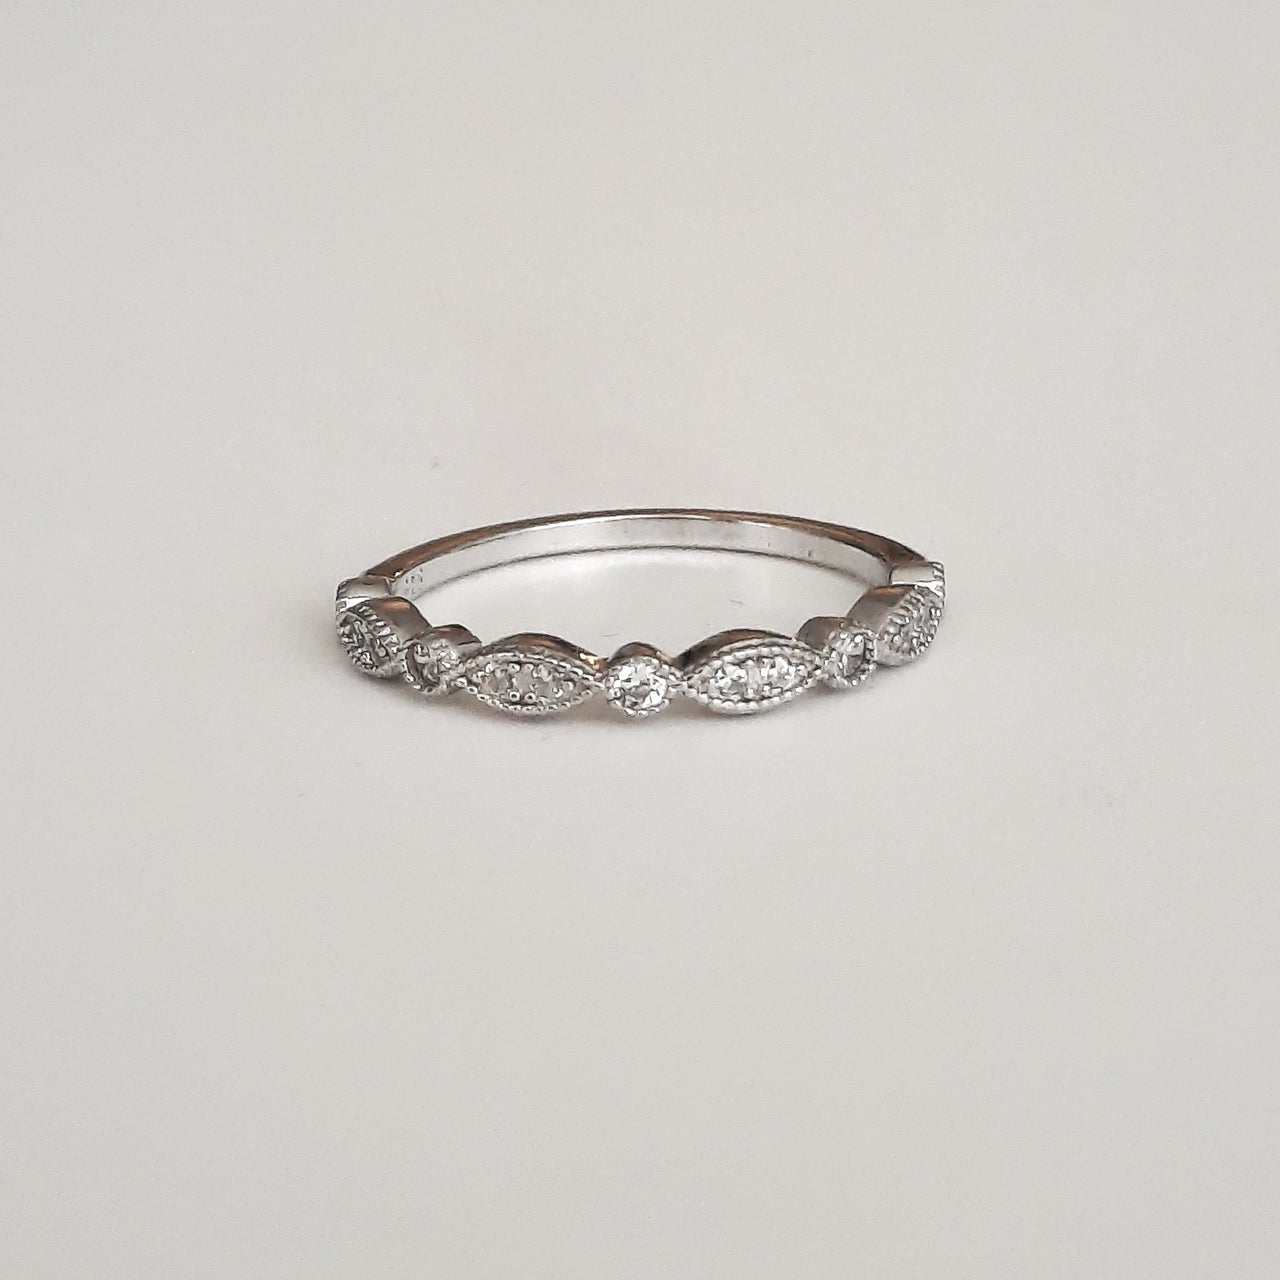 Zirkonia-Ring aus echtem 925 Silber - Princessa Ringe KOOMPLIMENTS